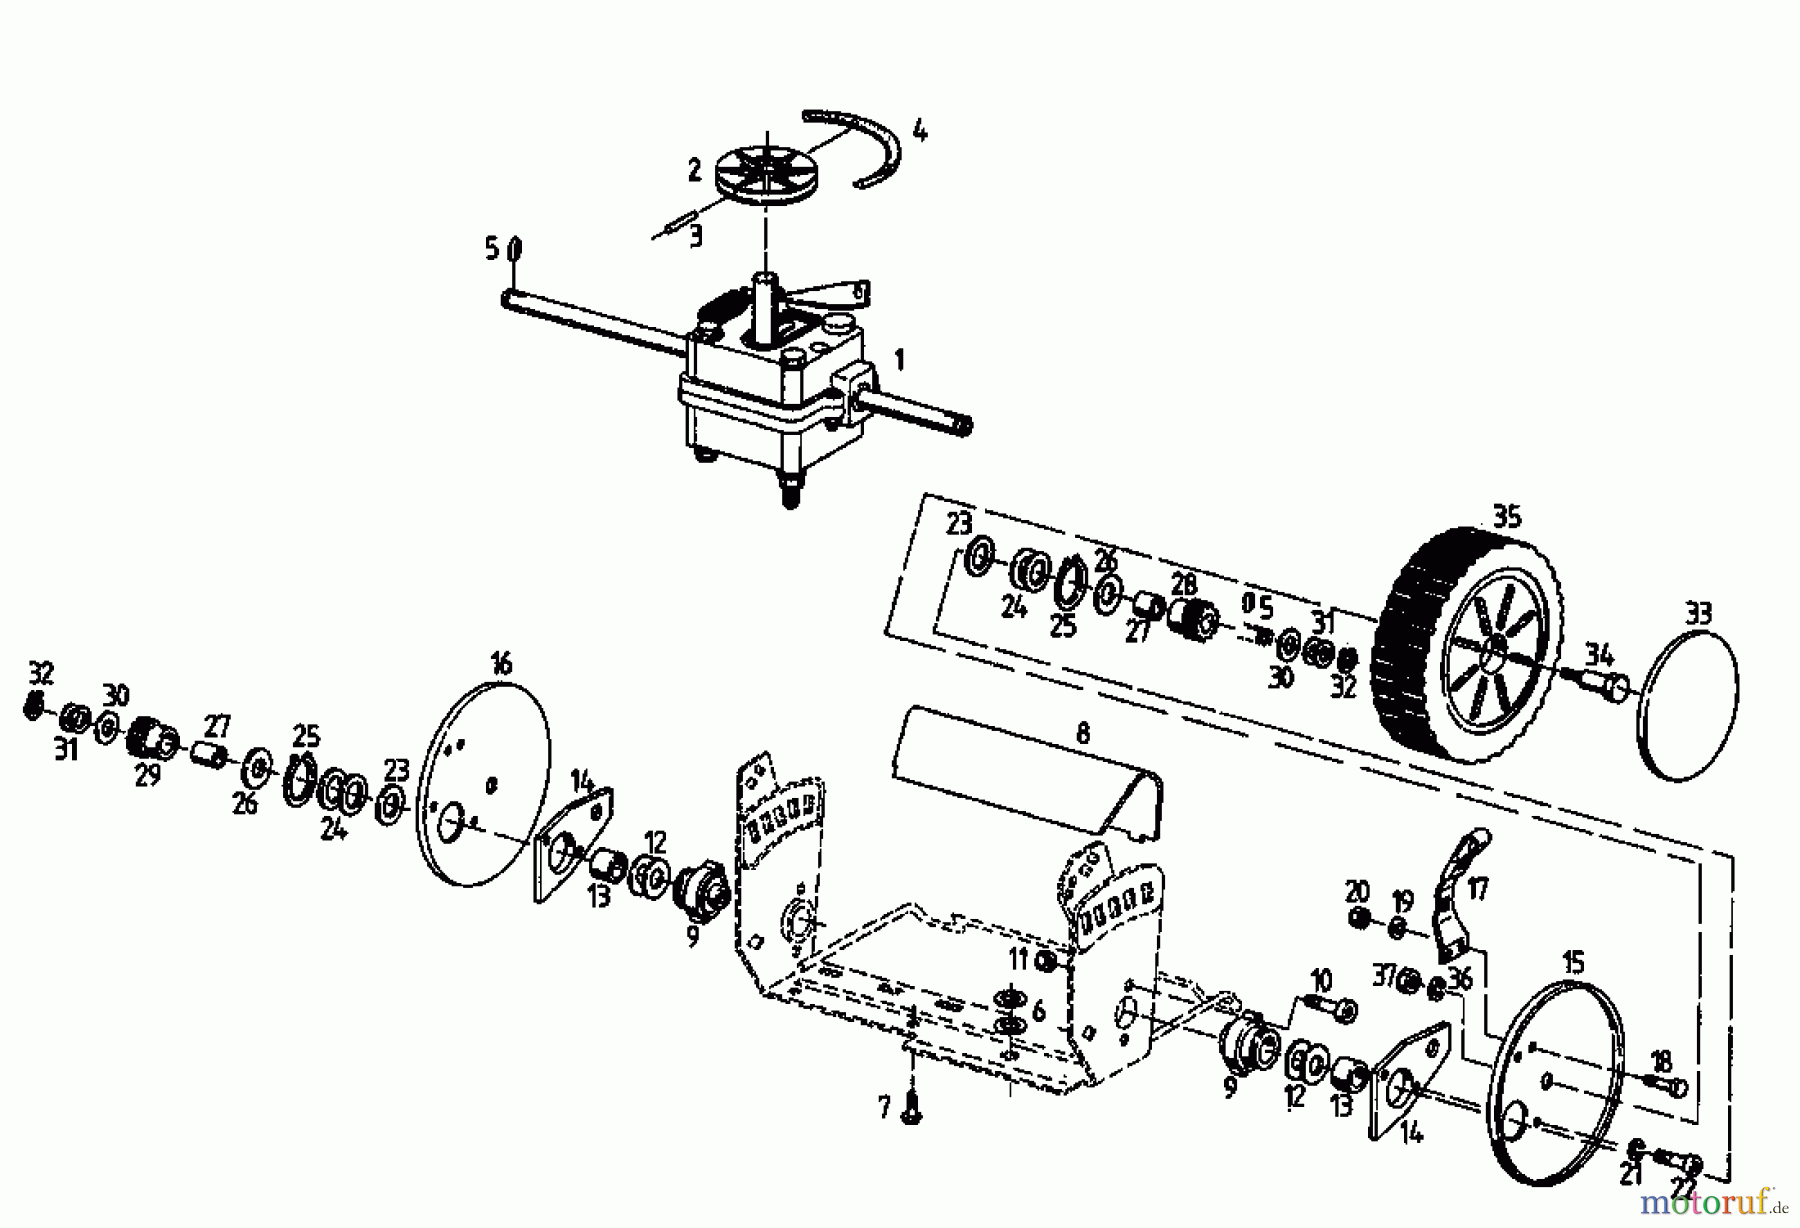  Diana Petrol mower self propelled 45 BA 04025.04  (1995) Gearbox, Wheels, Cutting hight adjustment